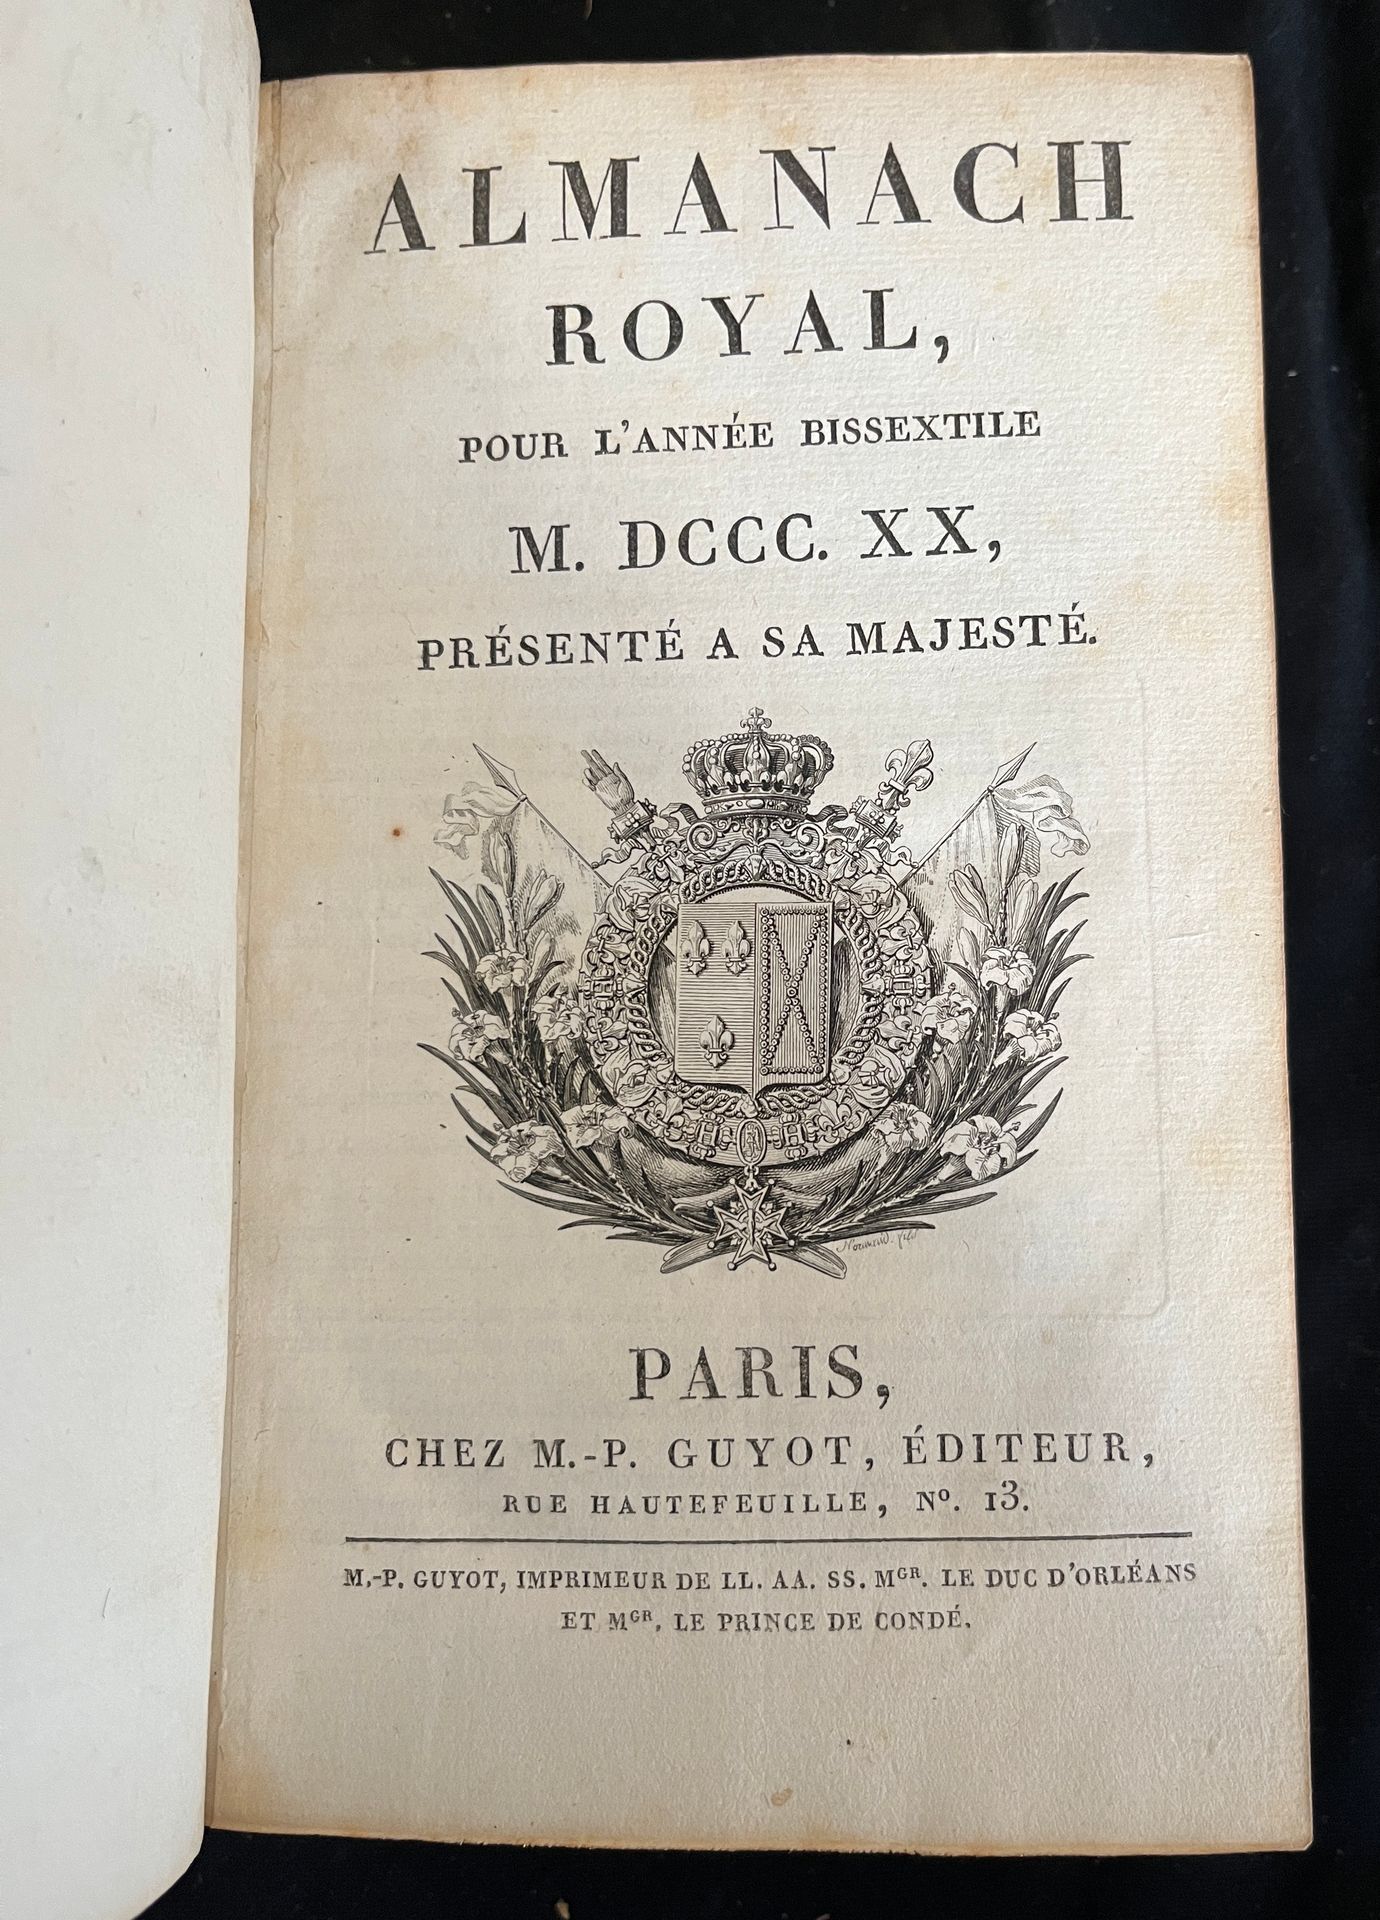 Null [ALMANACH]
Royal almanac for the leap year 1820. Paris, chez M.-P.Guyot rue&hellip;